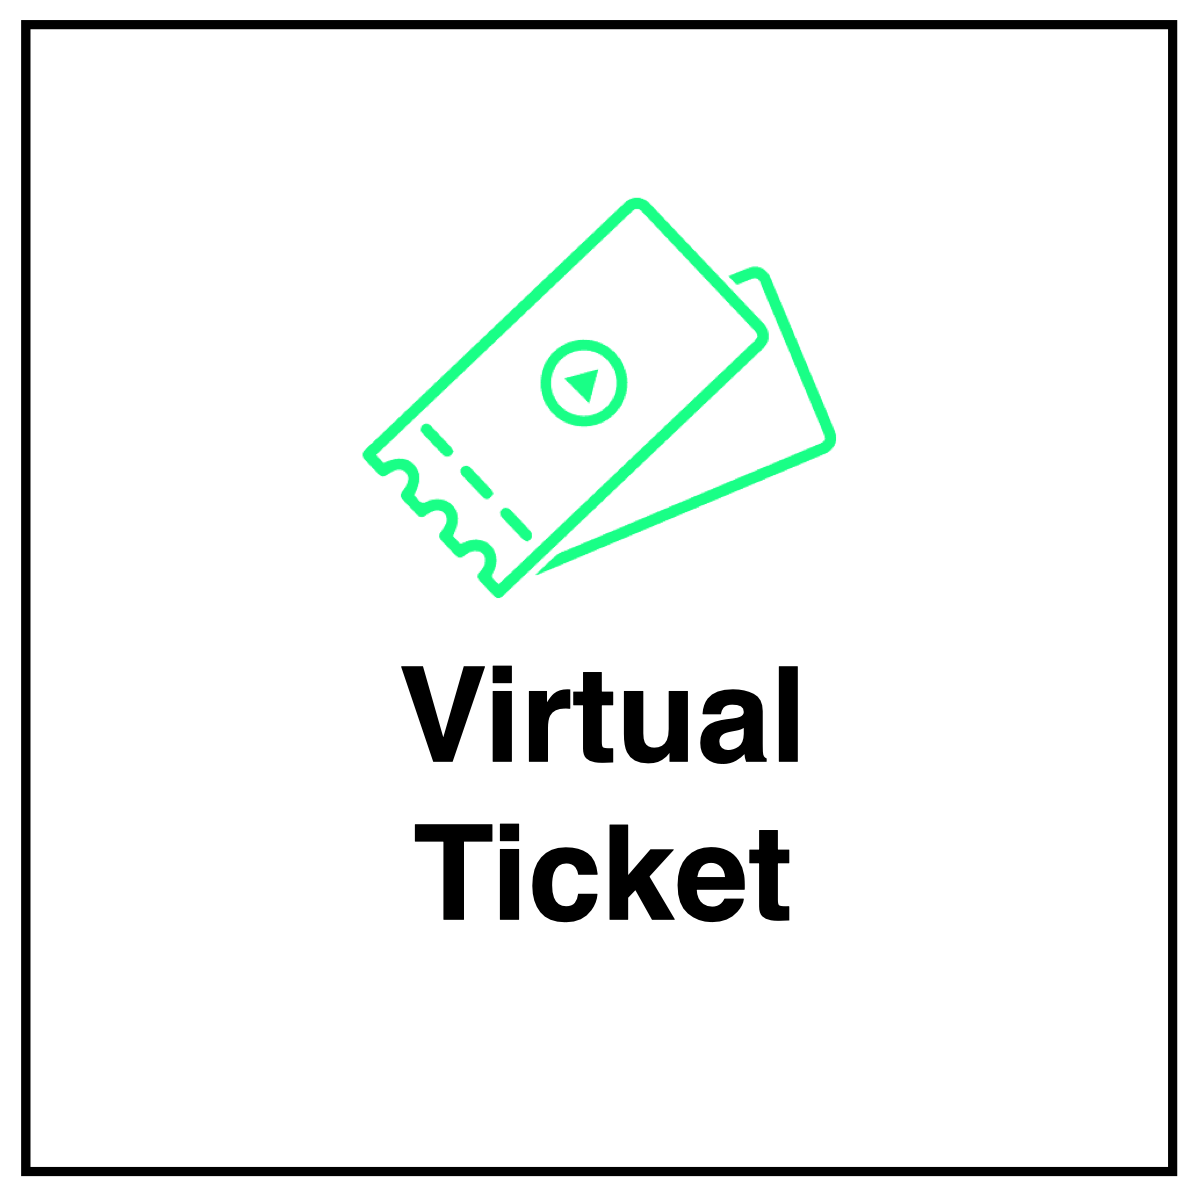 FTC - Virtual Ticket